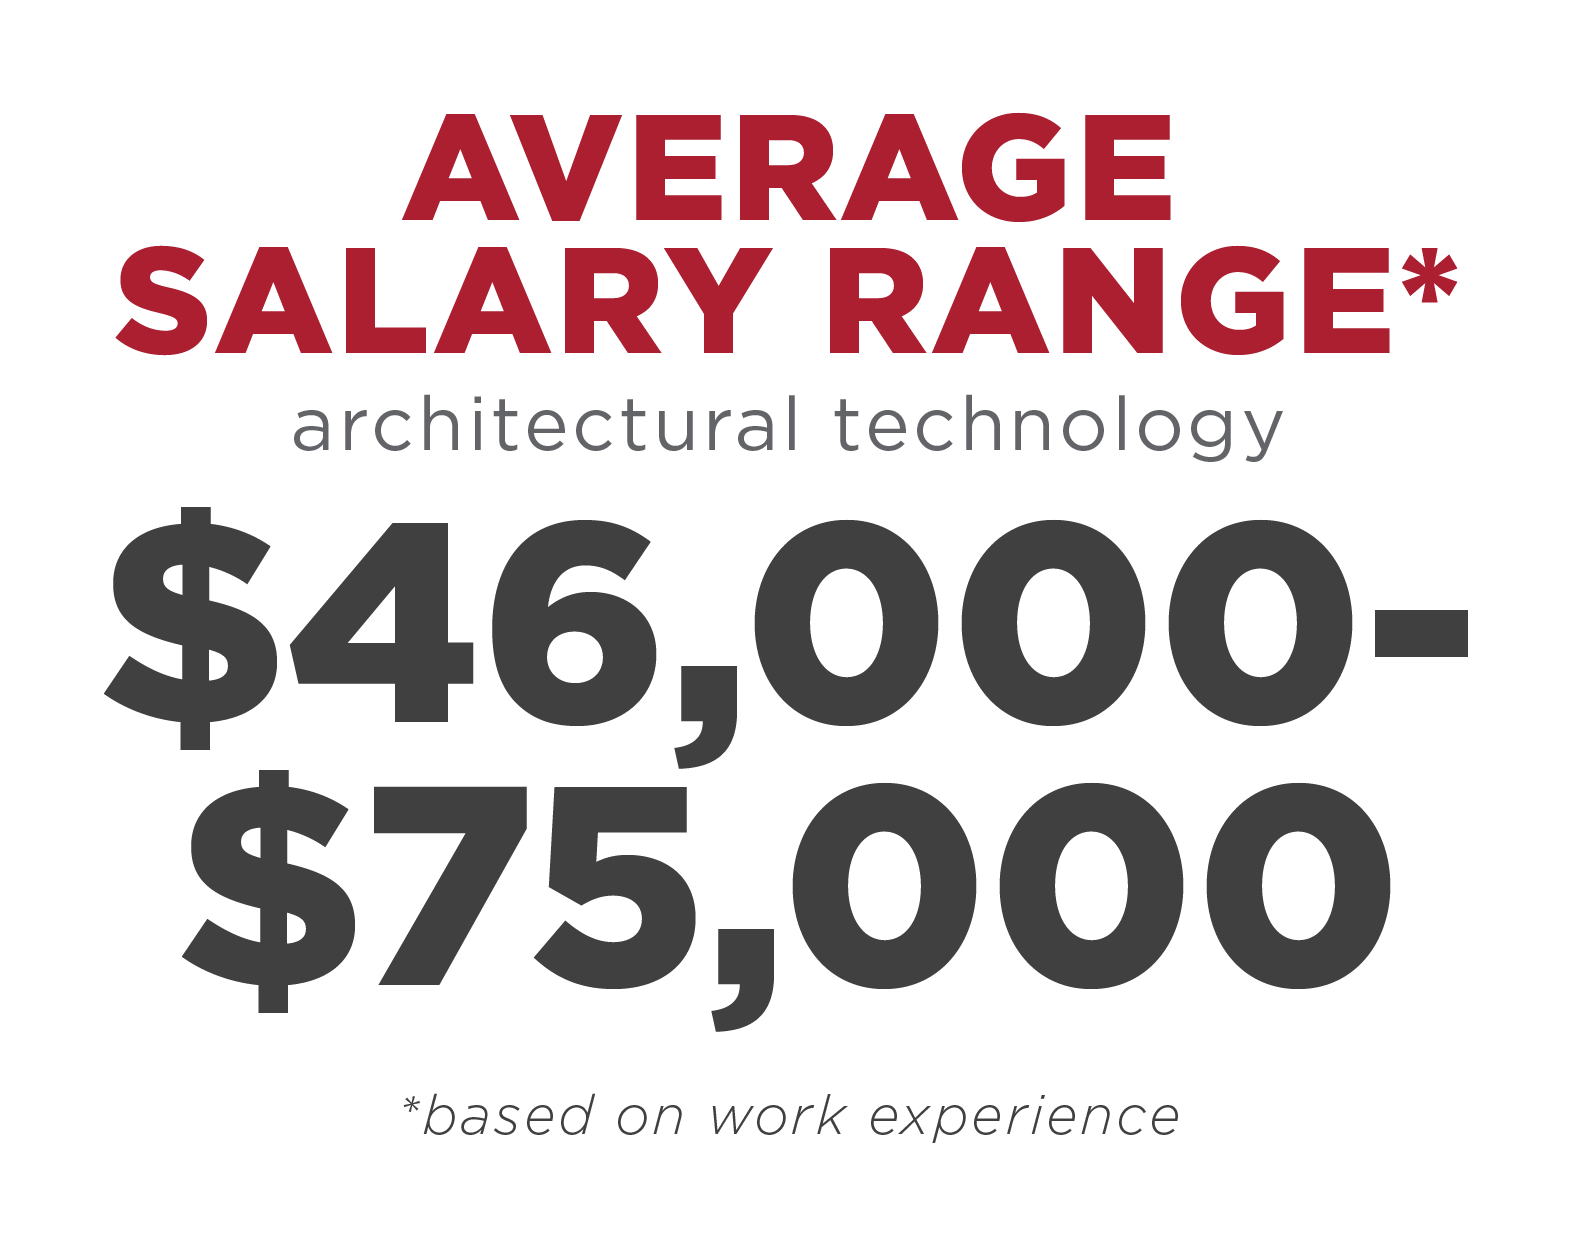 Architectural Technology salary range